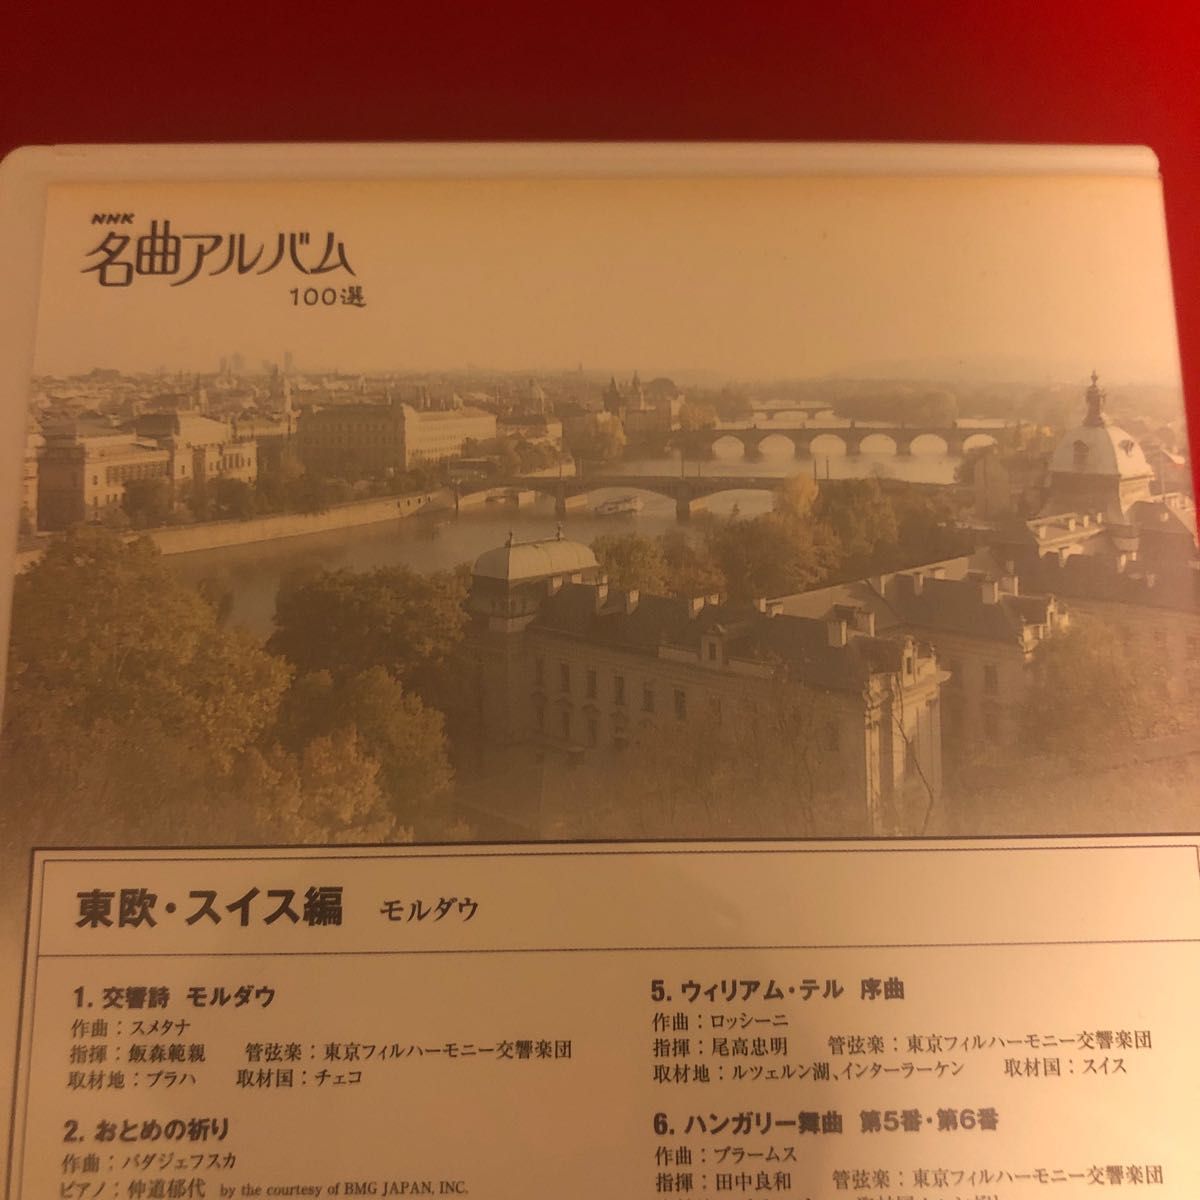 NHK名曲アルバム100選 DVD-BOX〈10枚組〉